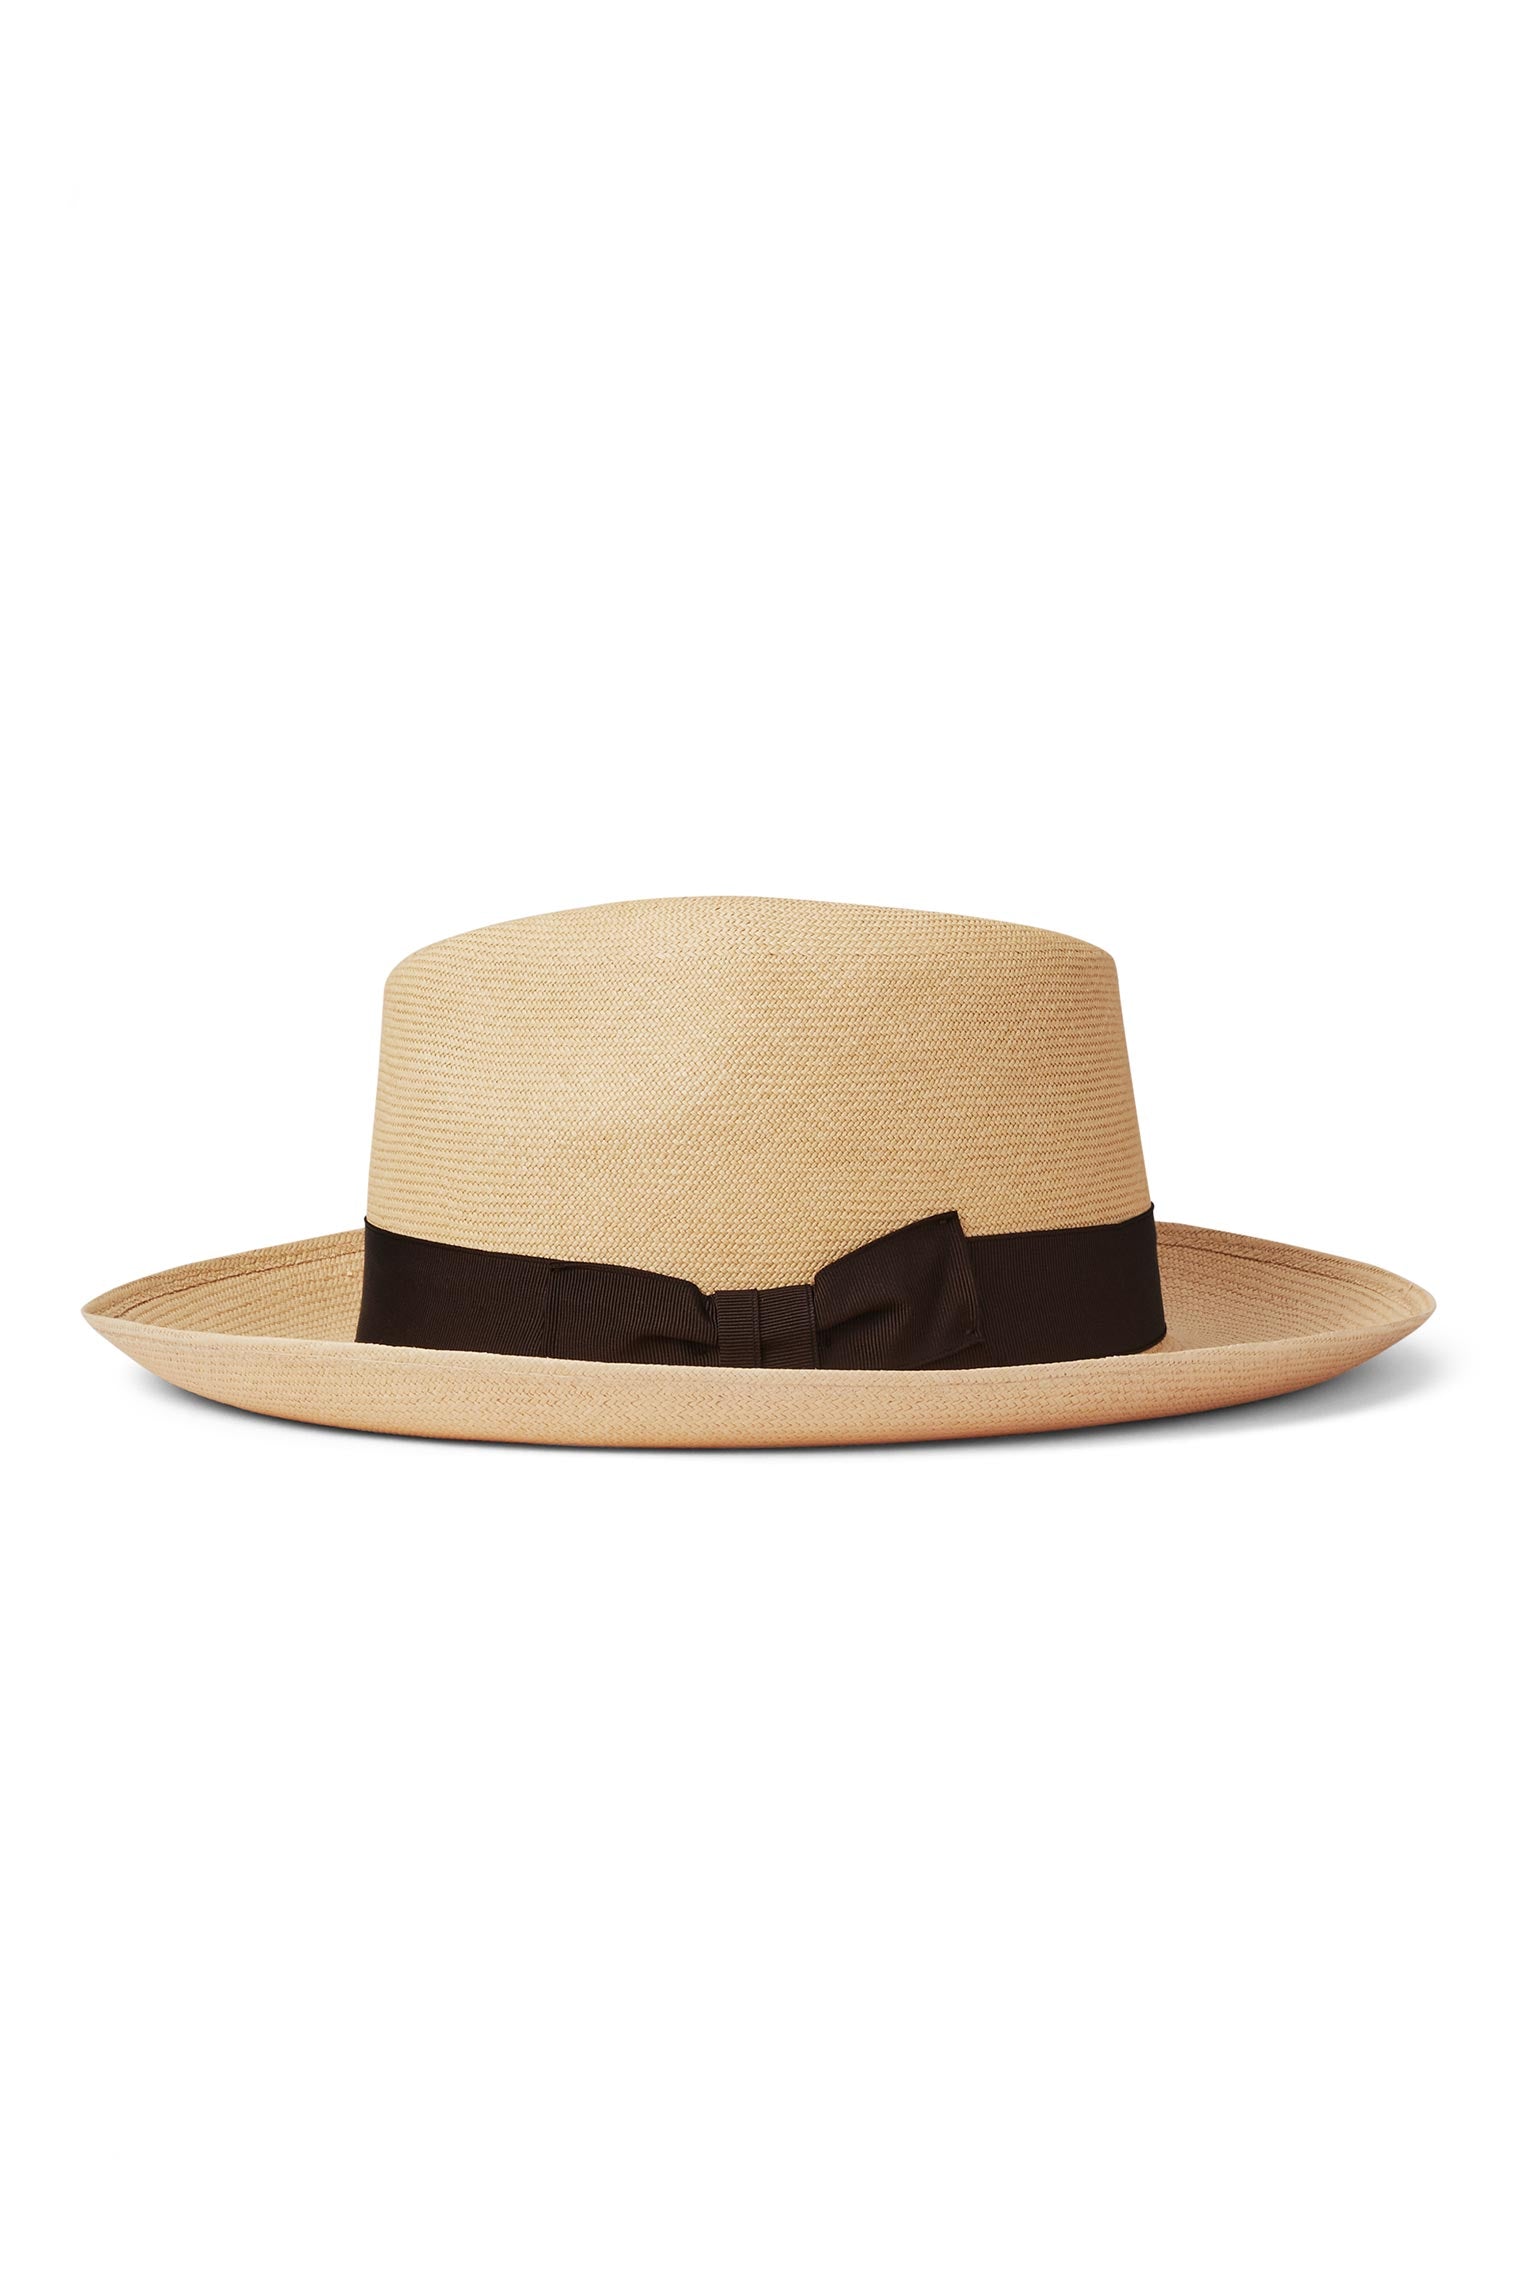 Ventnor Cuenca Ultra-fino Panama - Panamas, Straw and Sun Hats for Men - Lock & Co. Hatters London UK